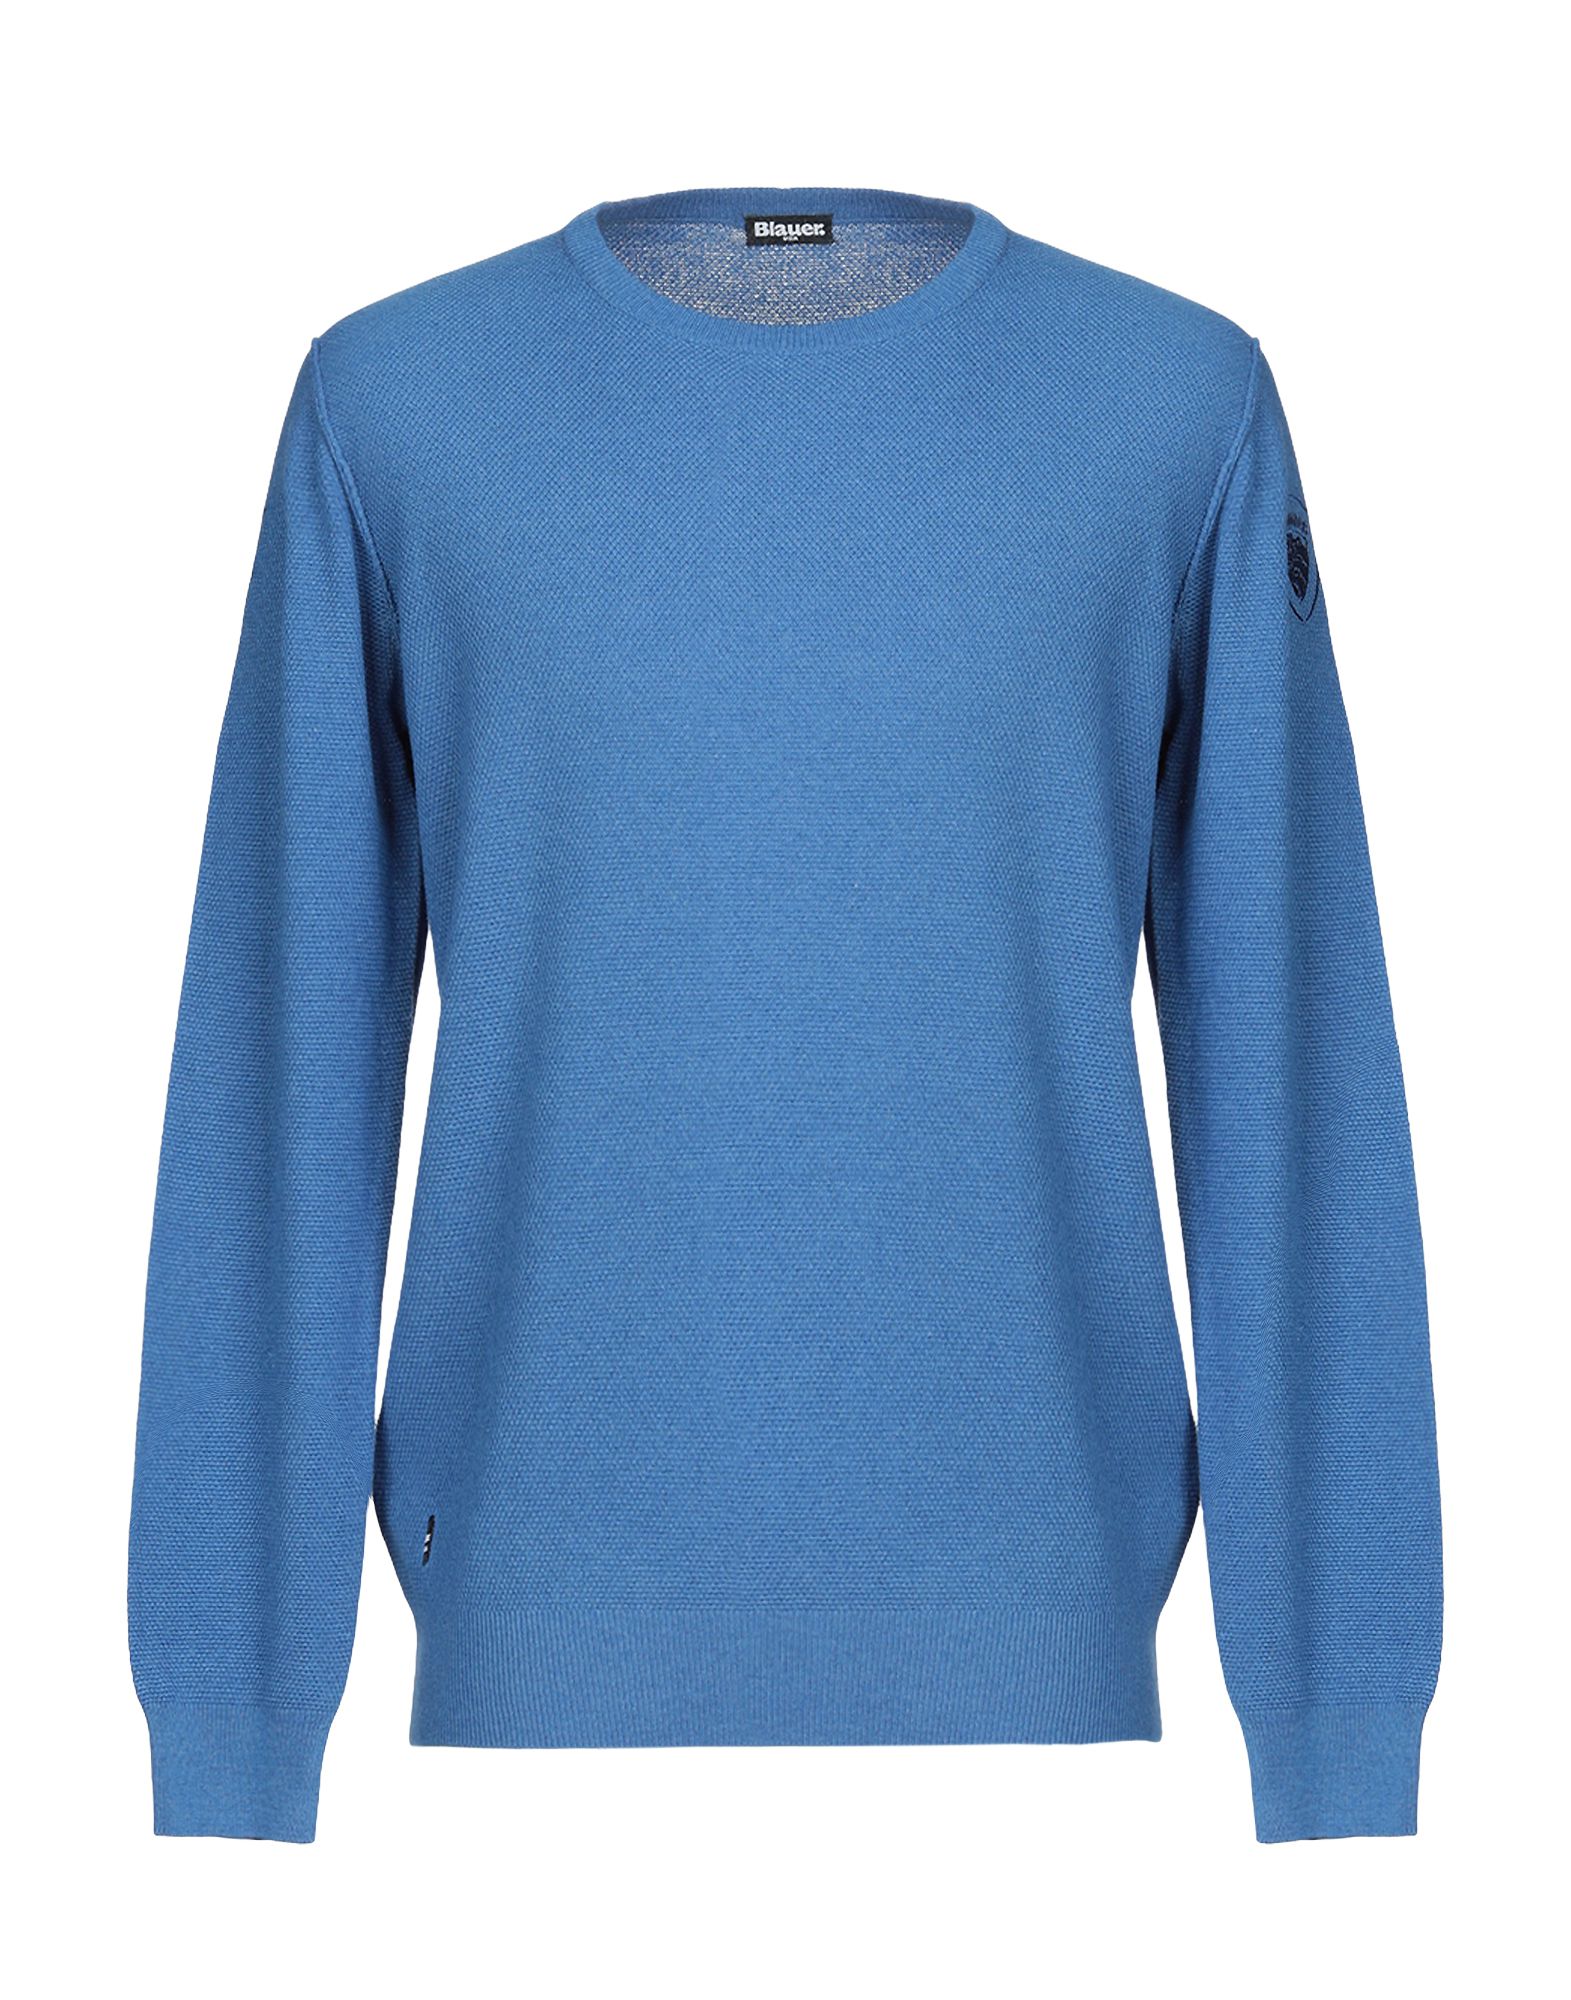 BLAUER Sweaters - Item 39928310